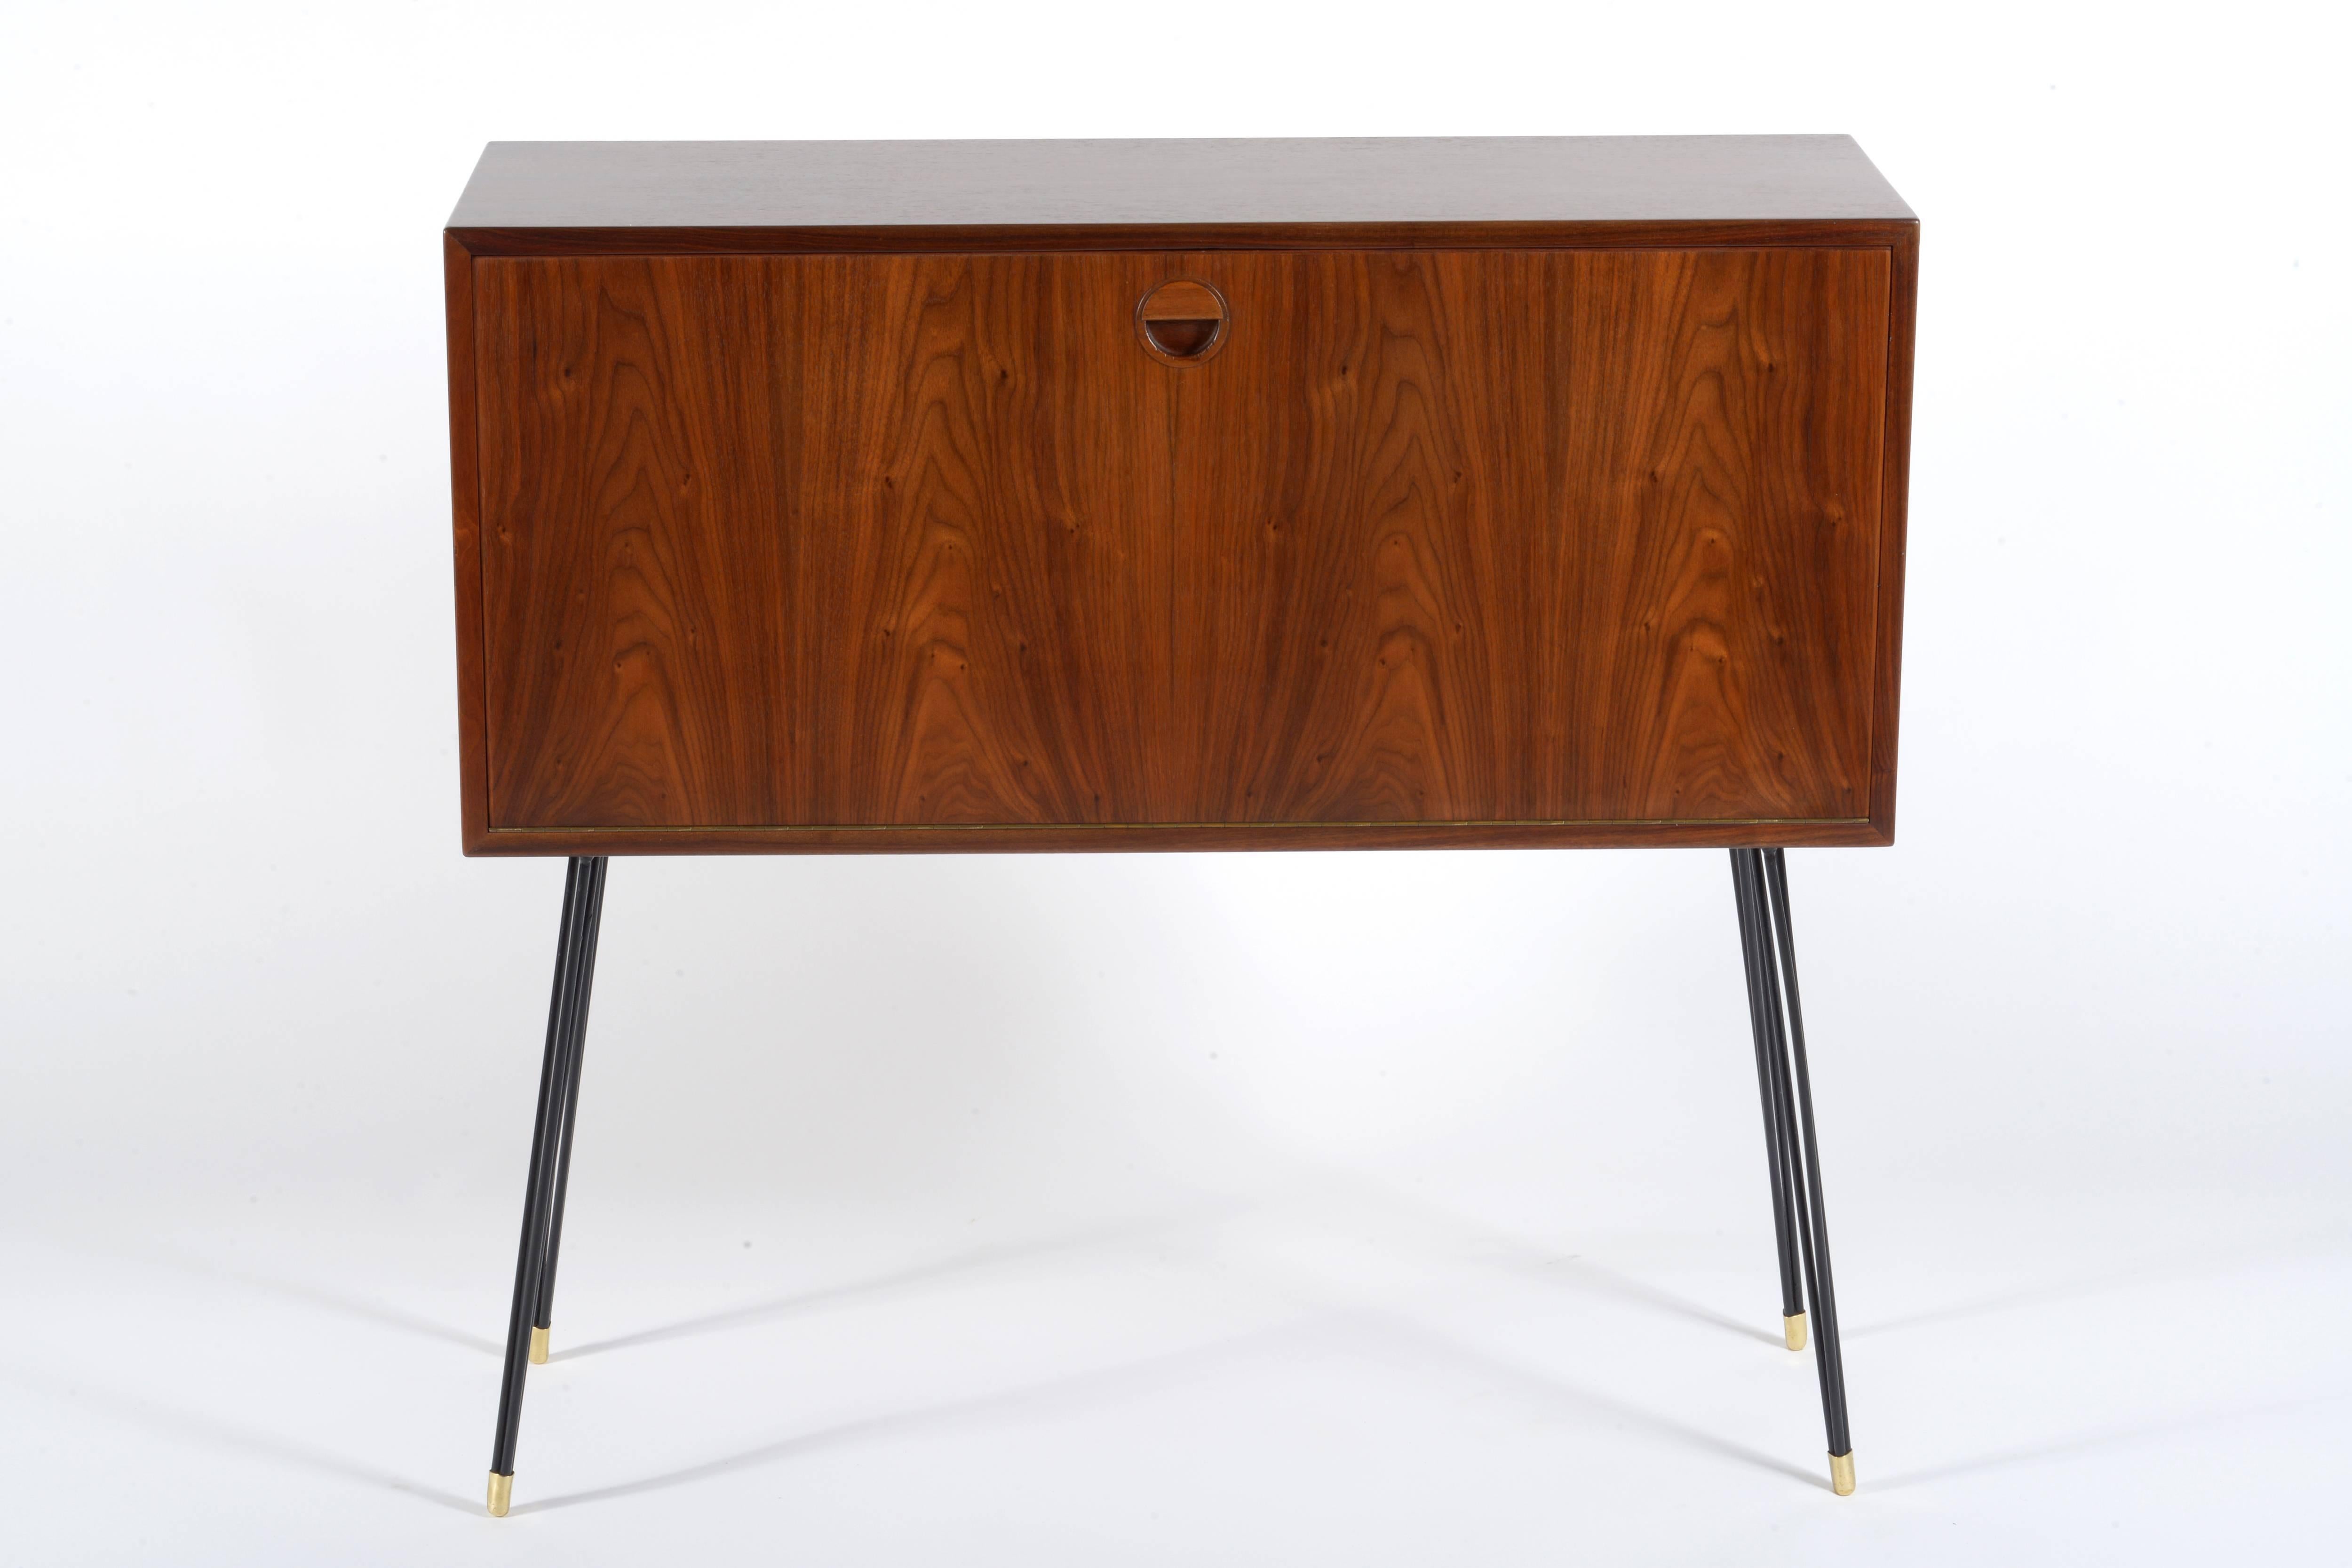  Danish teak wood cabinet by Manufacture -Danish Furniture